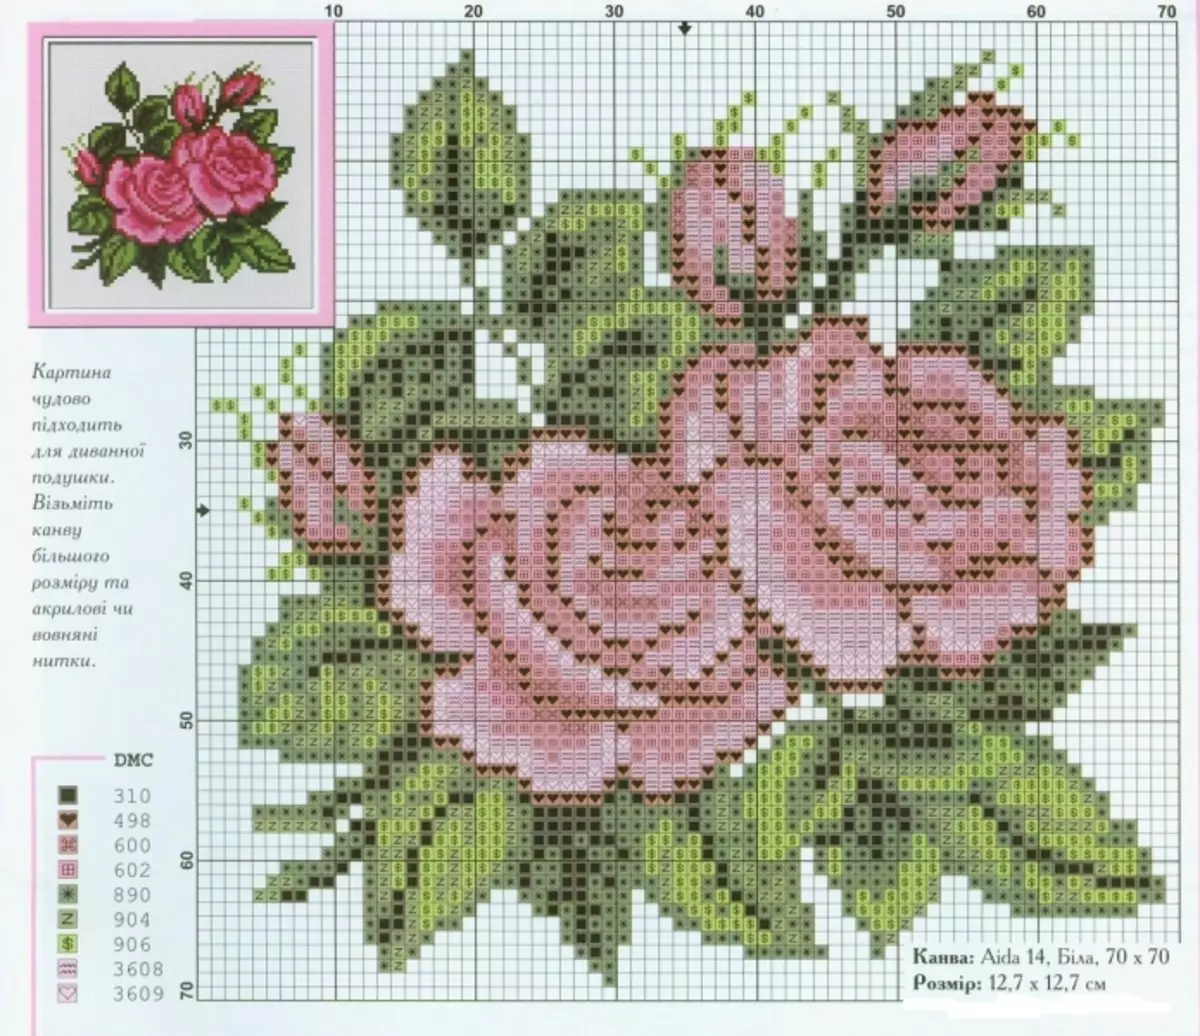 Cross-Stitch ורדים תוכניות: חינם למתחילים, תה באגרטל, זר בסל, לבן הורדה, צהוב